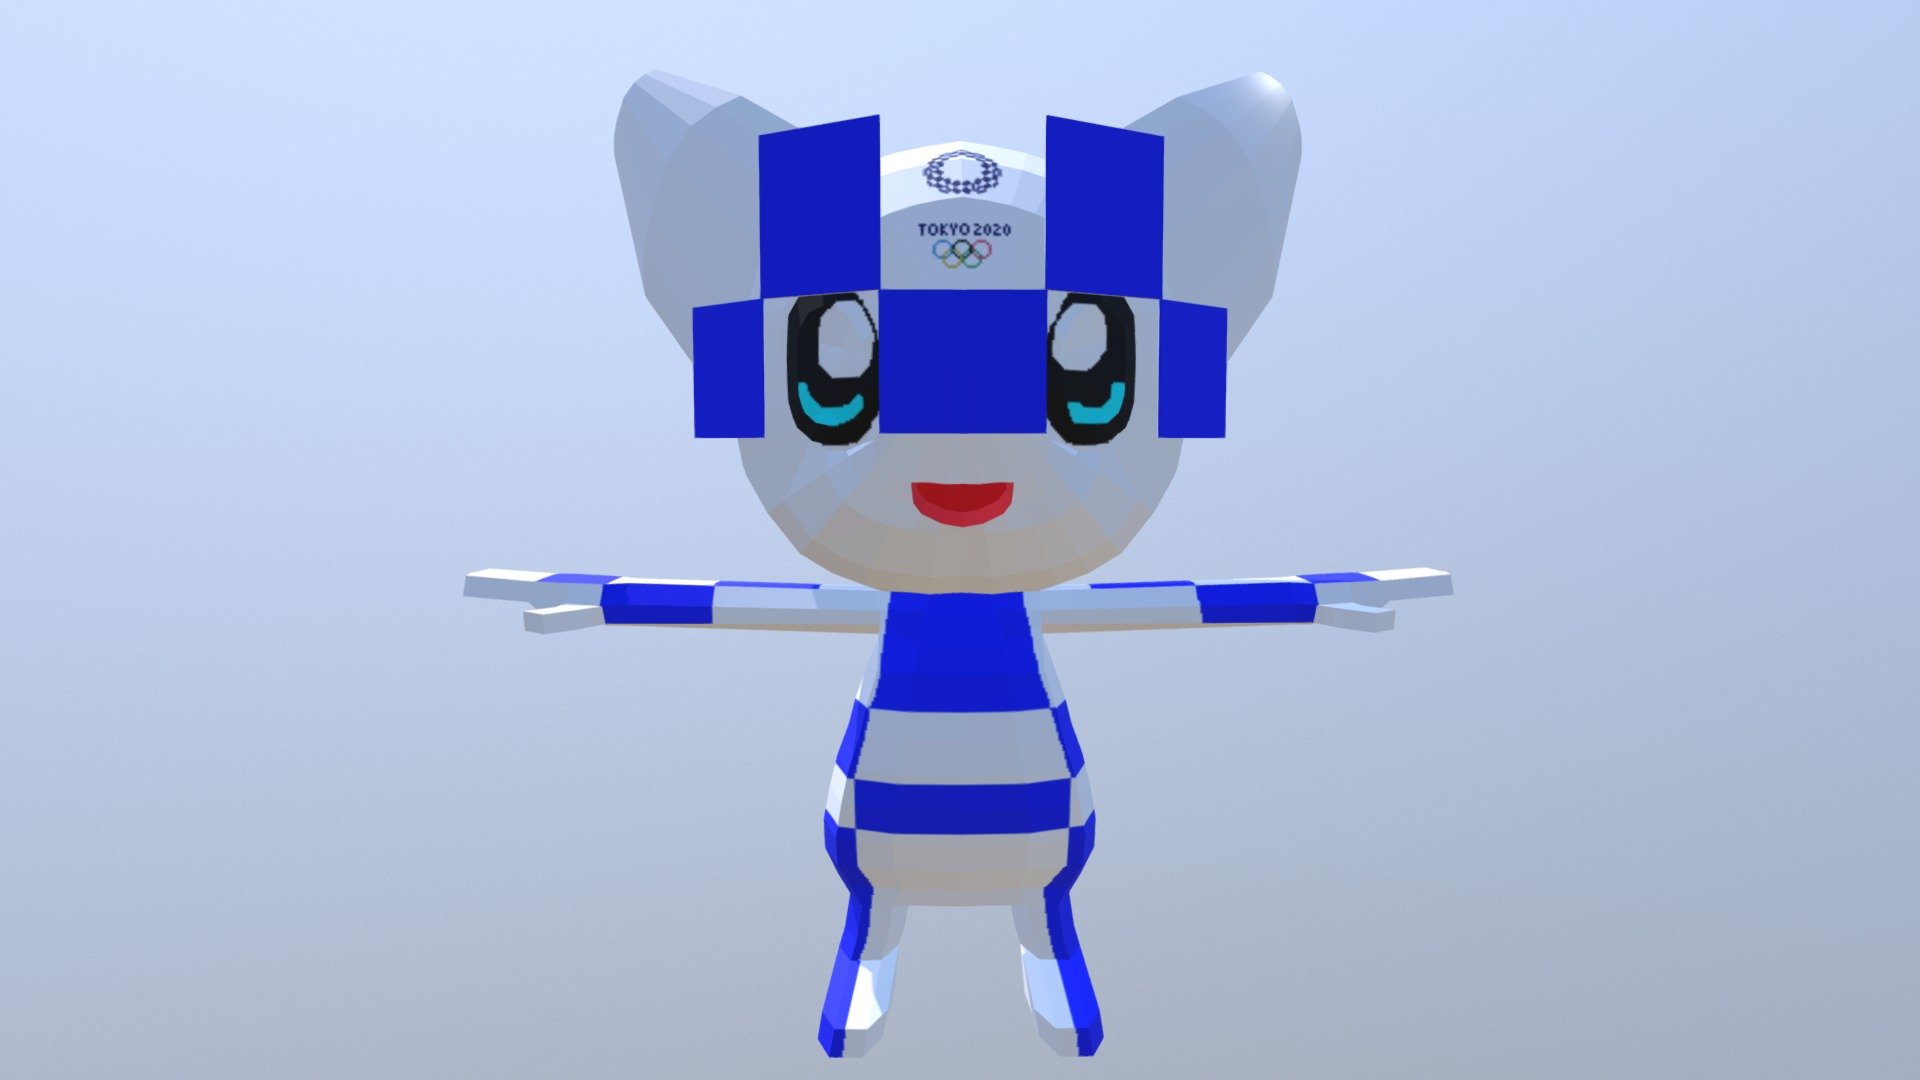 Tokyo 2020 Blue Mascot